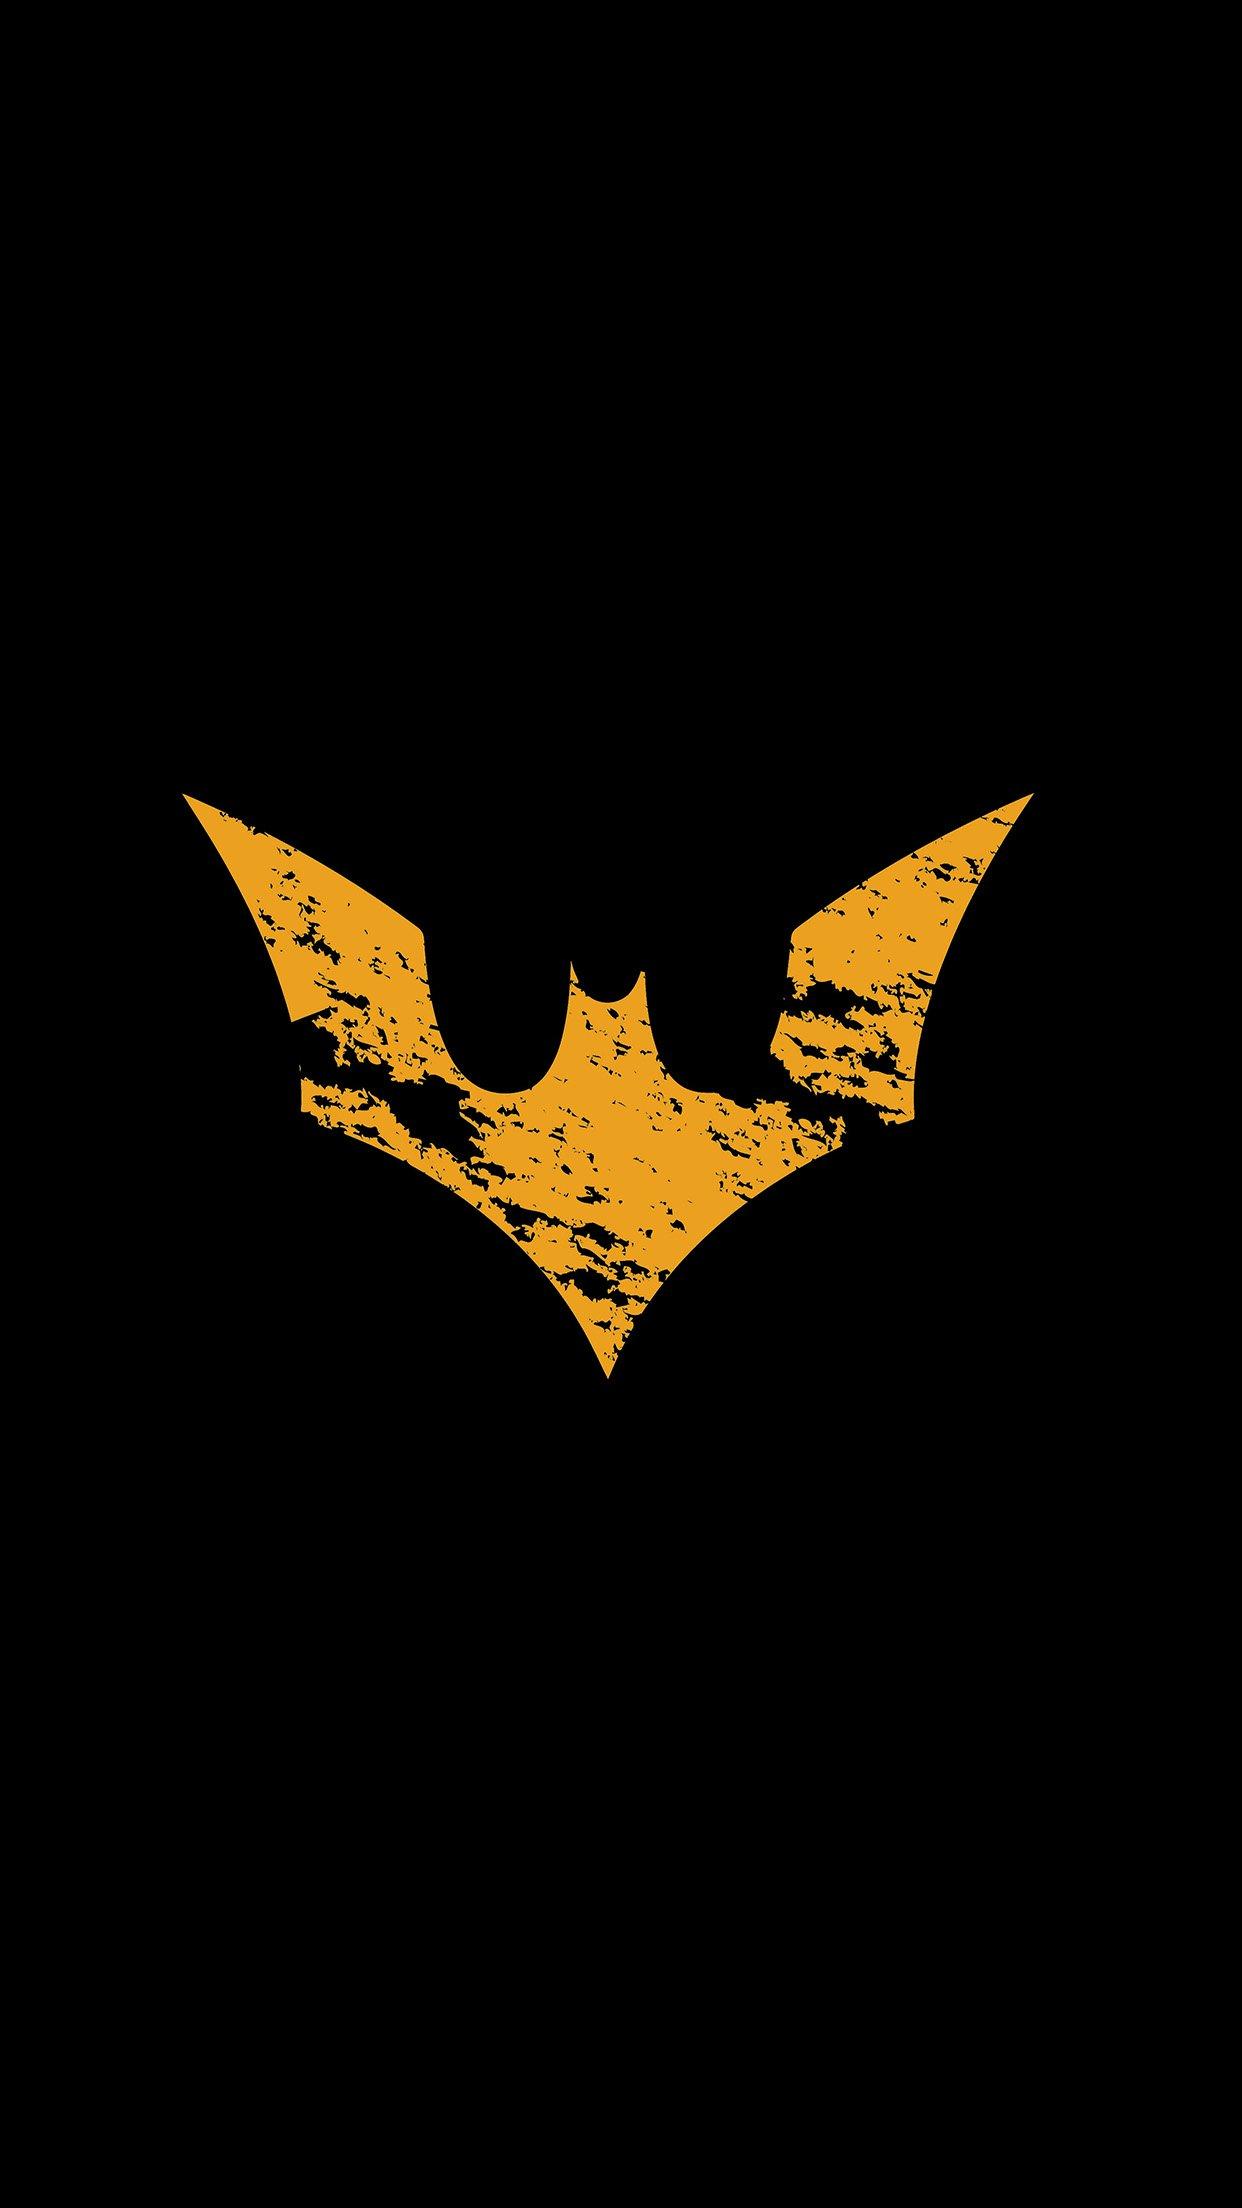 iPhone X wallpaper. batman logo yellow dark hero art